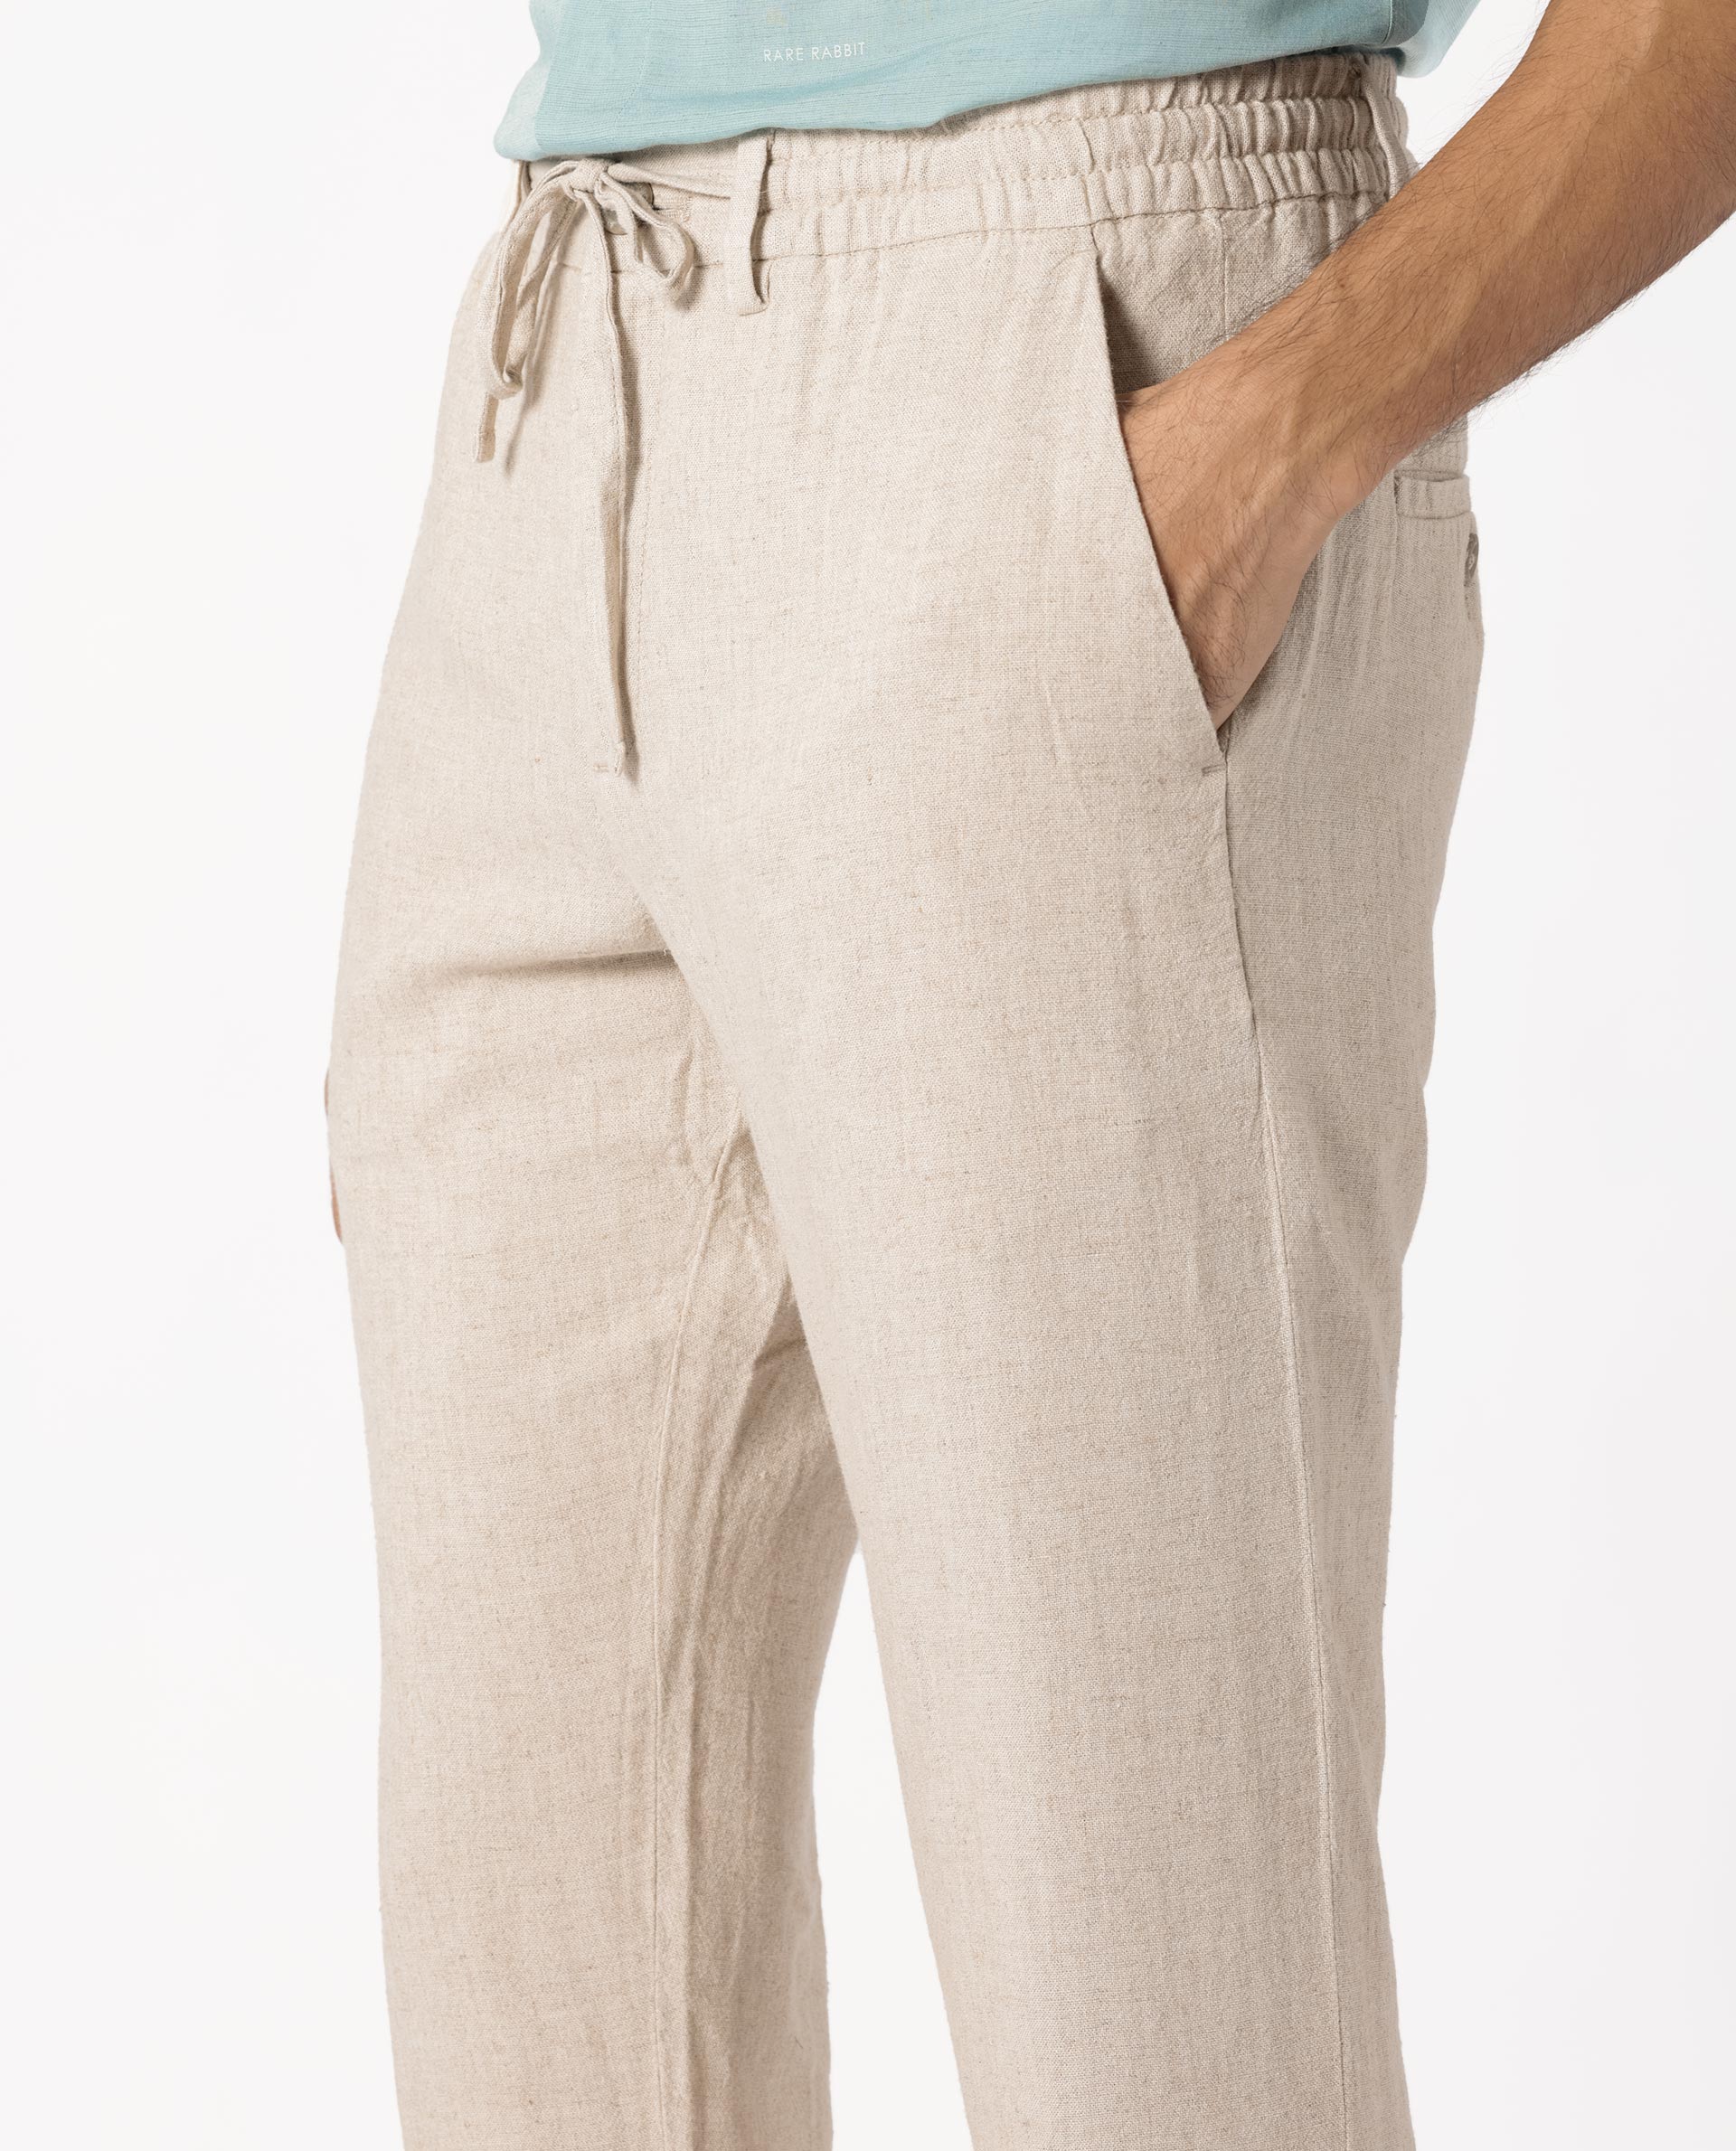 Buy Mens Linen Pants Online | Formal Linen Pants for Men | Linen Trousers/Pants  for Men Online | Ramraj Cotton